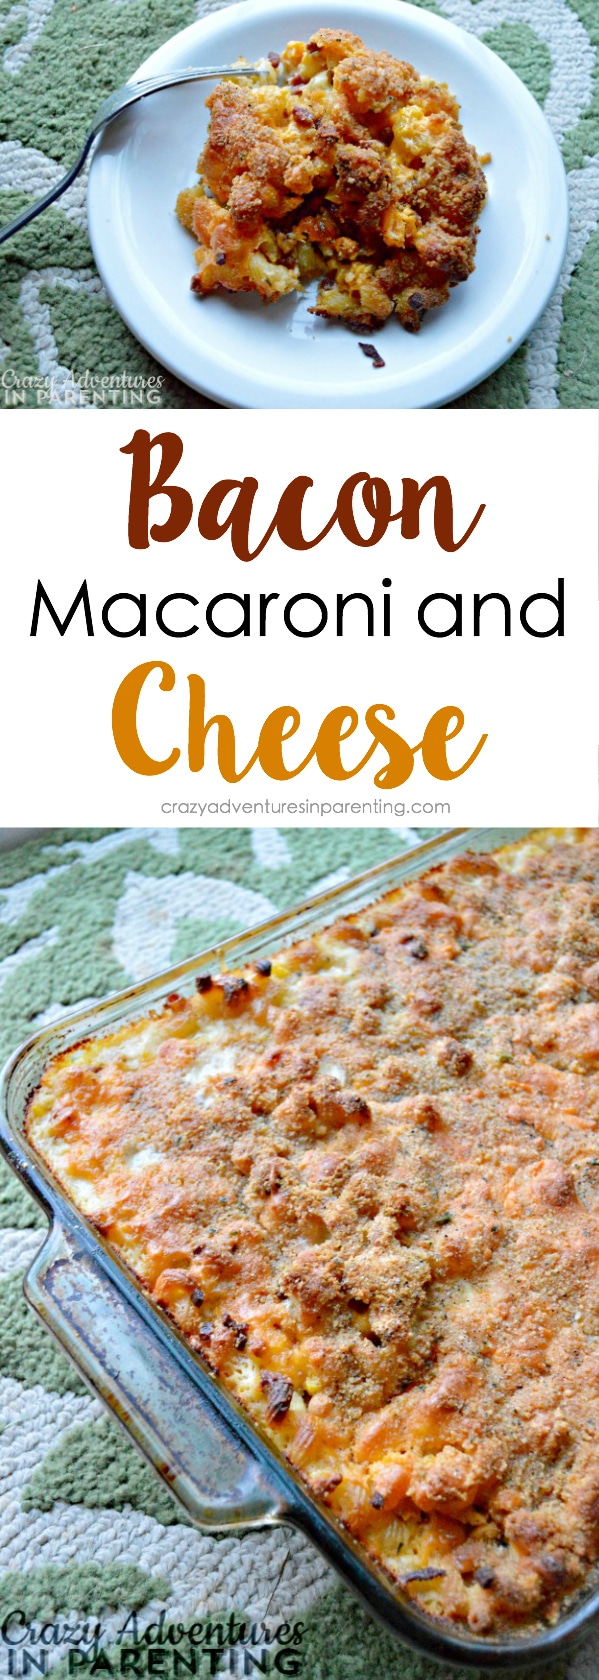 Bacon Macaroni and Cheese